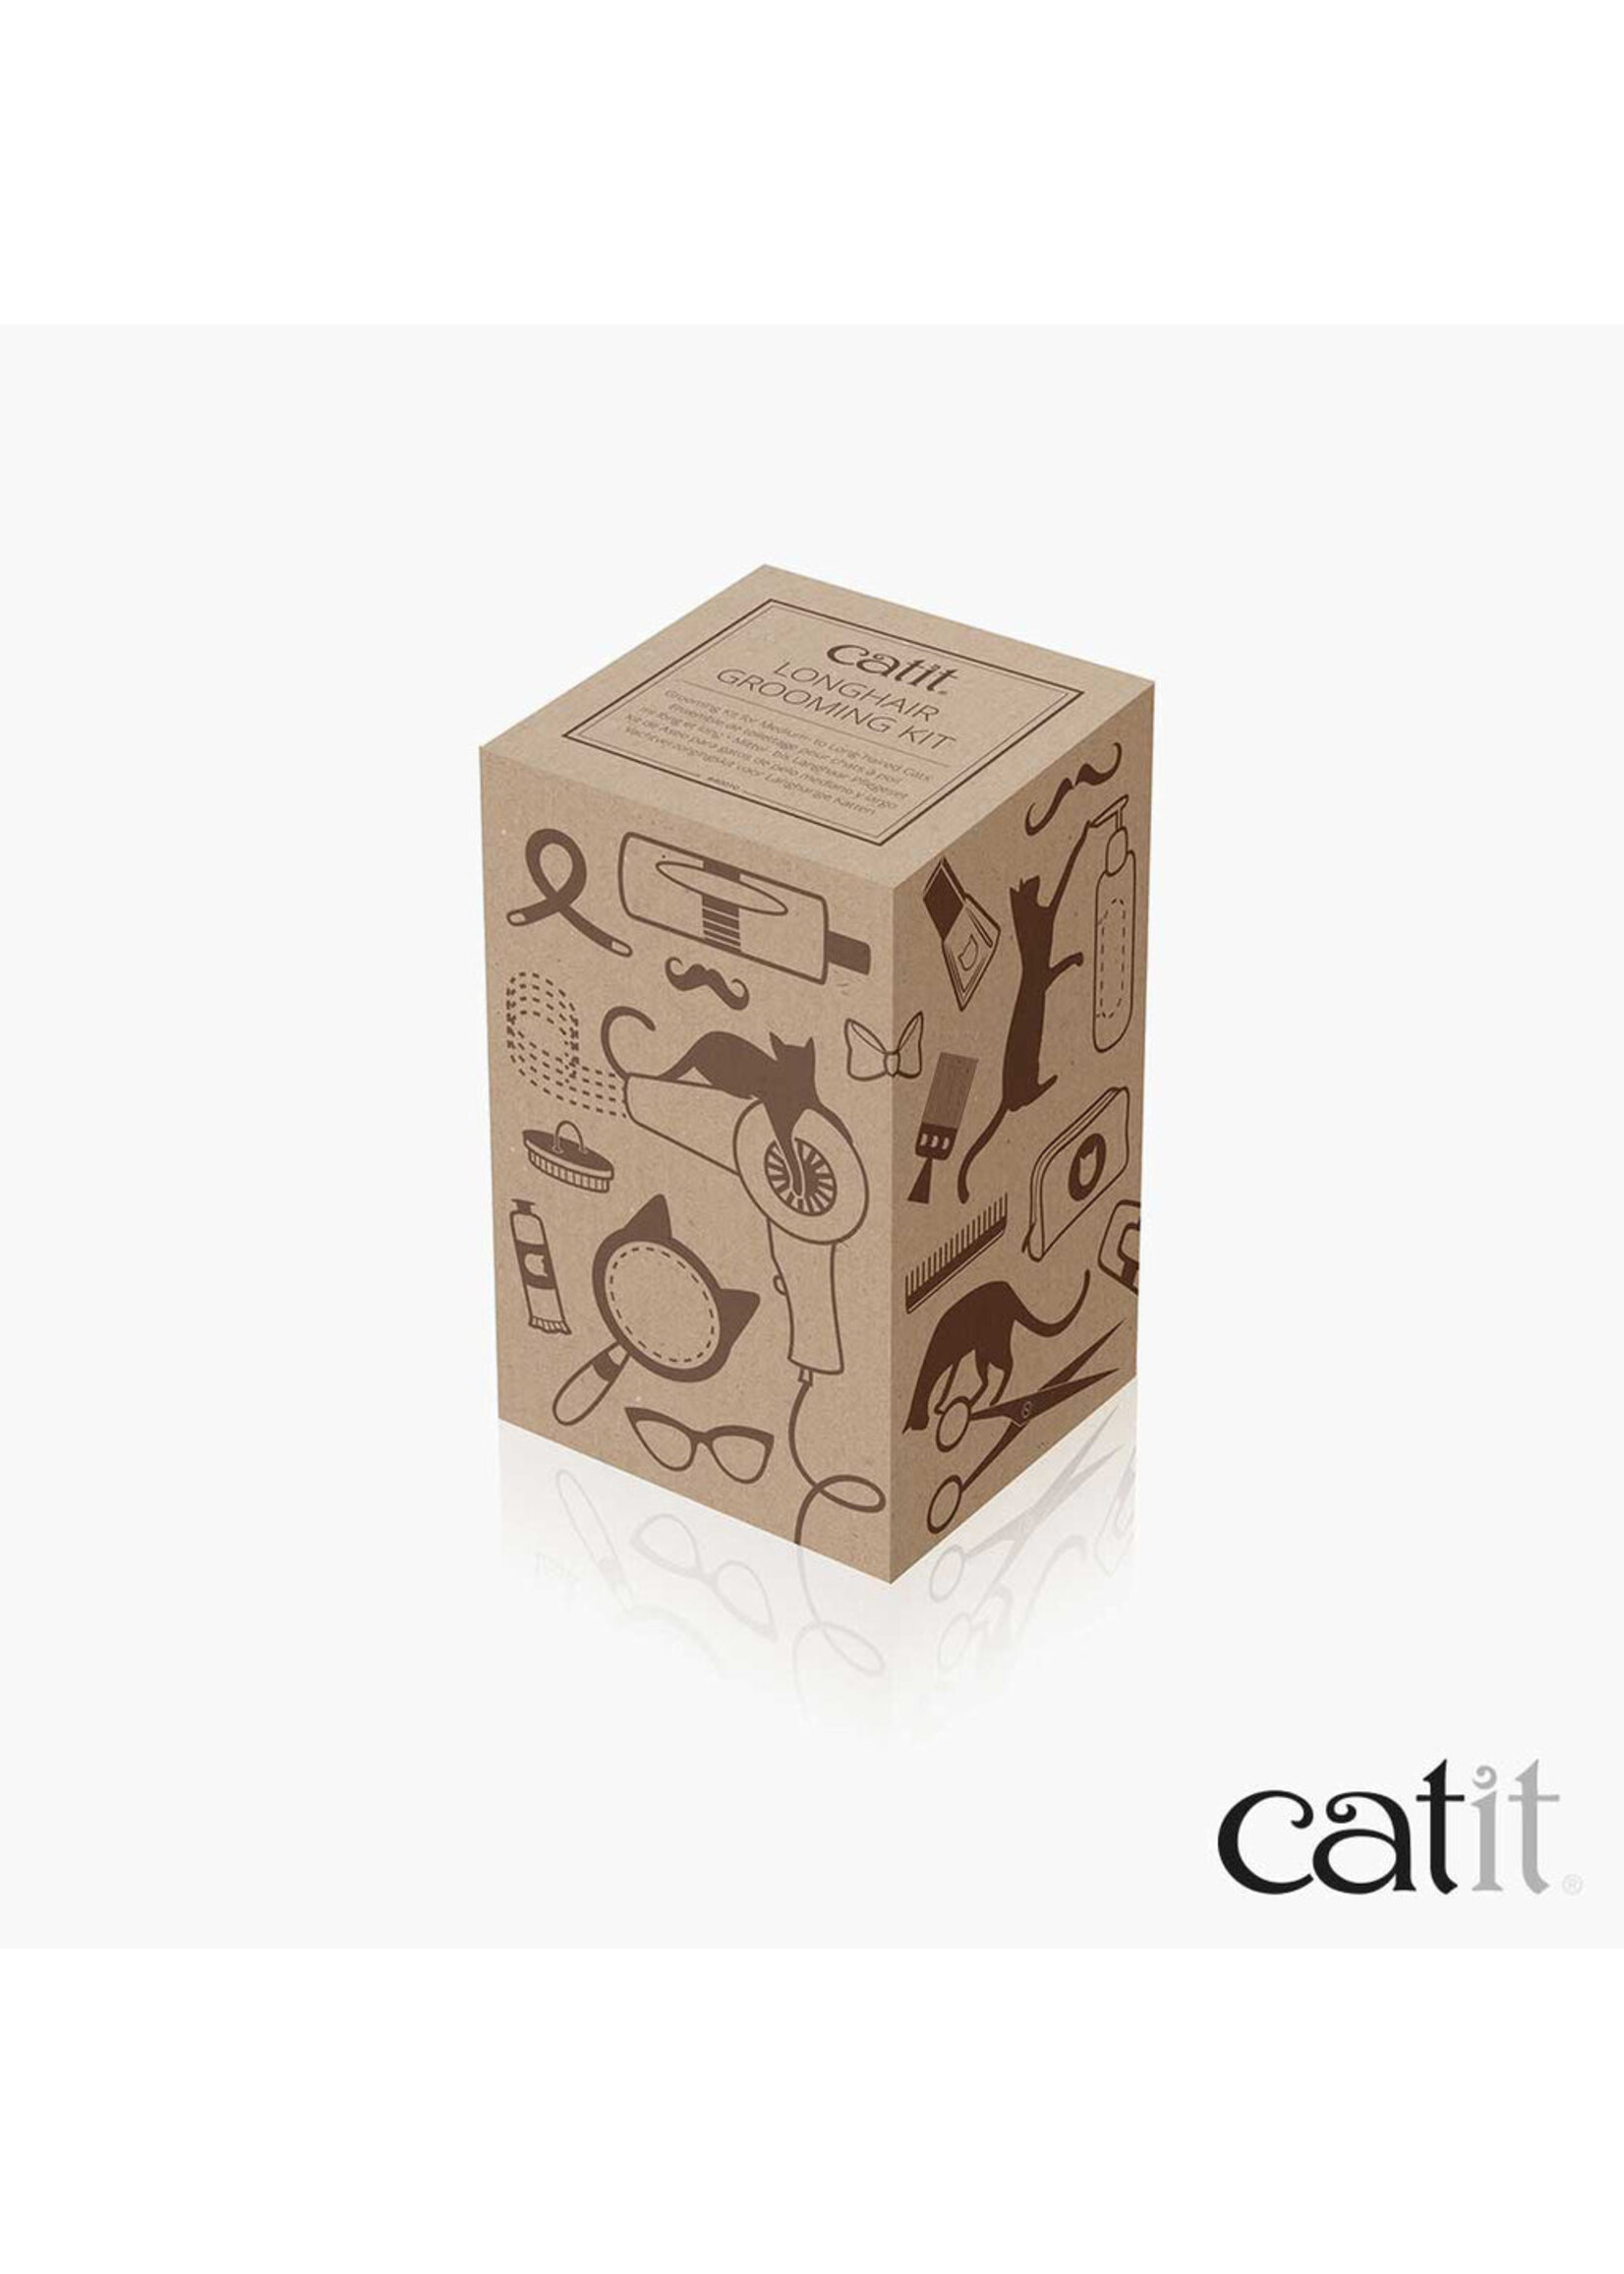 Catit Catit Longhair Grooming Kit